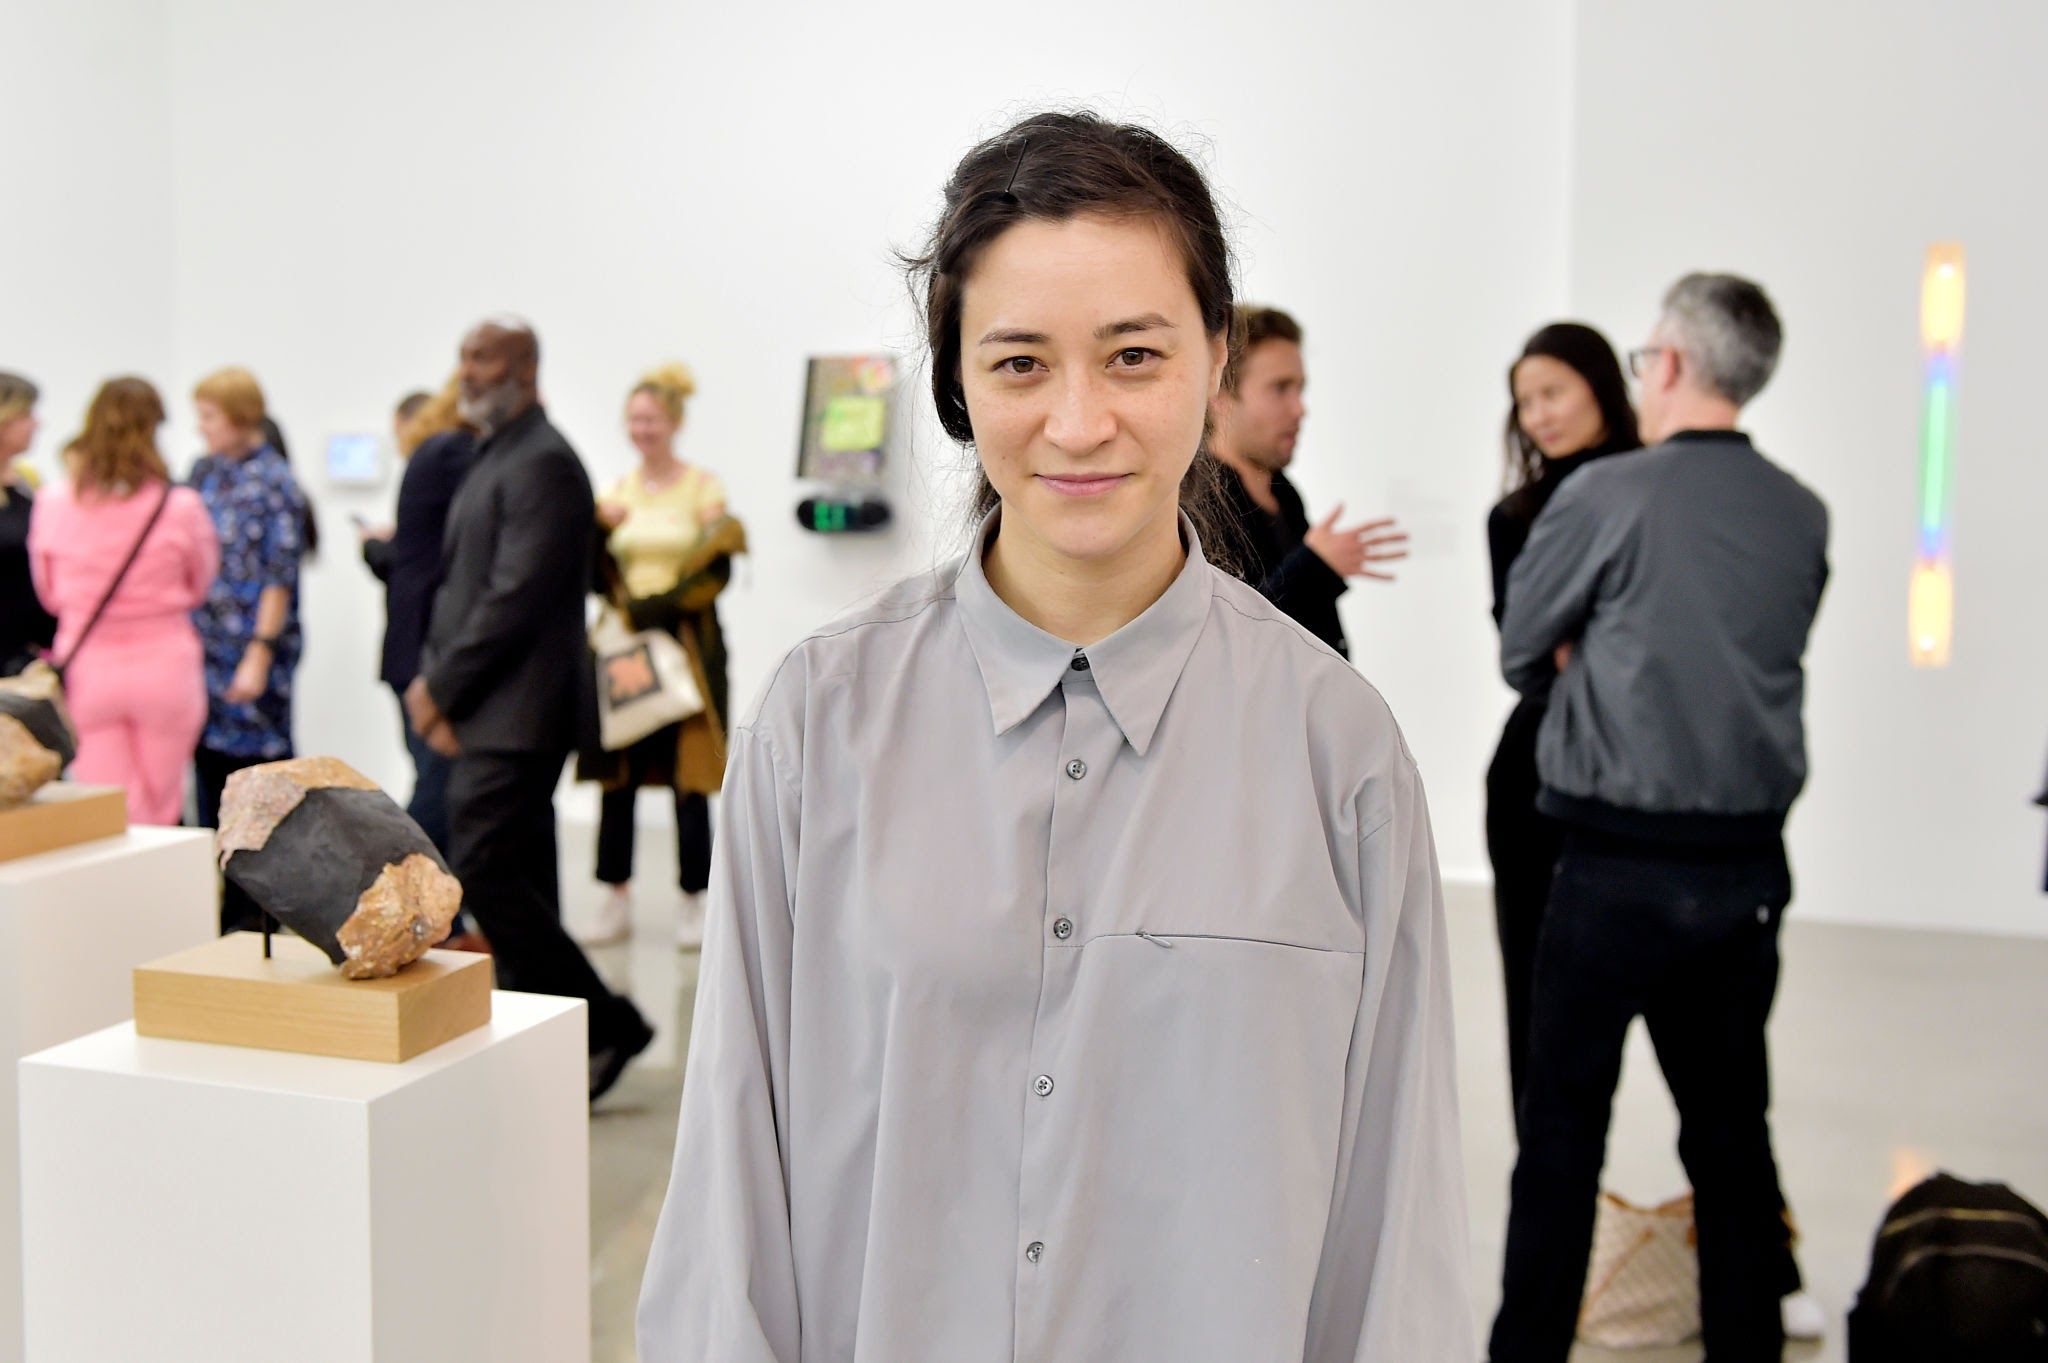 Gala Porras-Kim: Artist Talk at the Getty Center